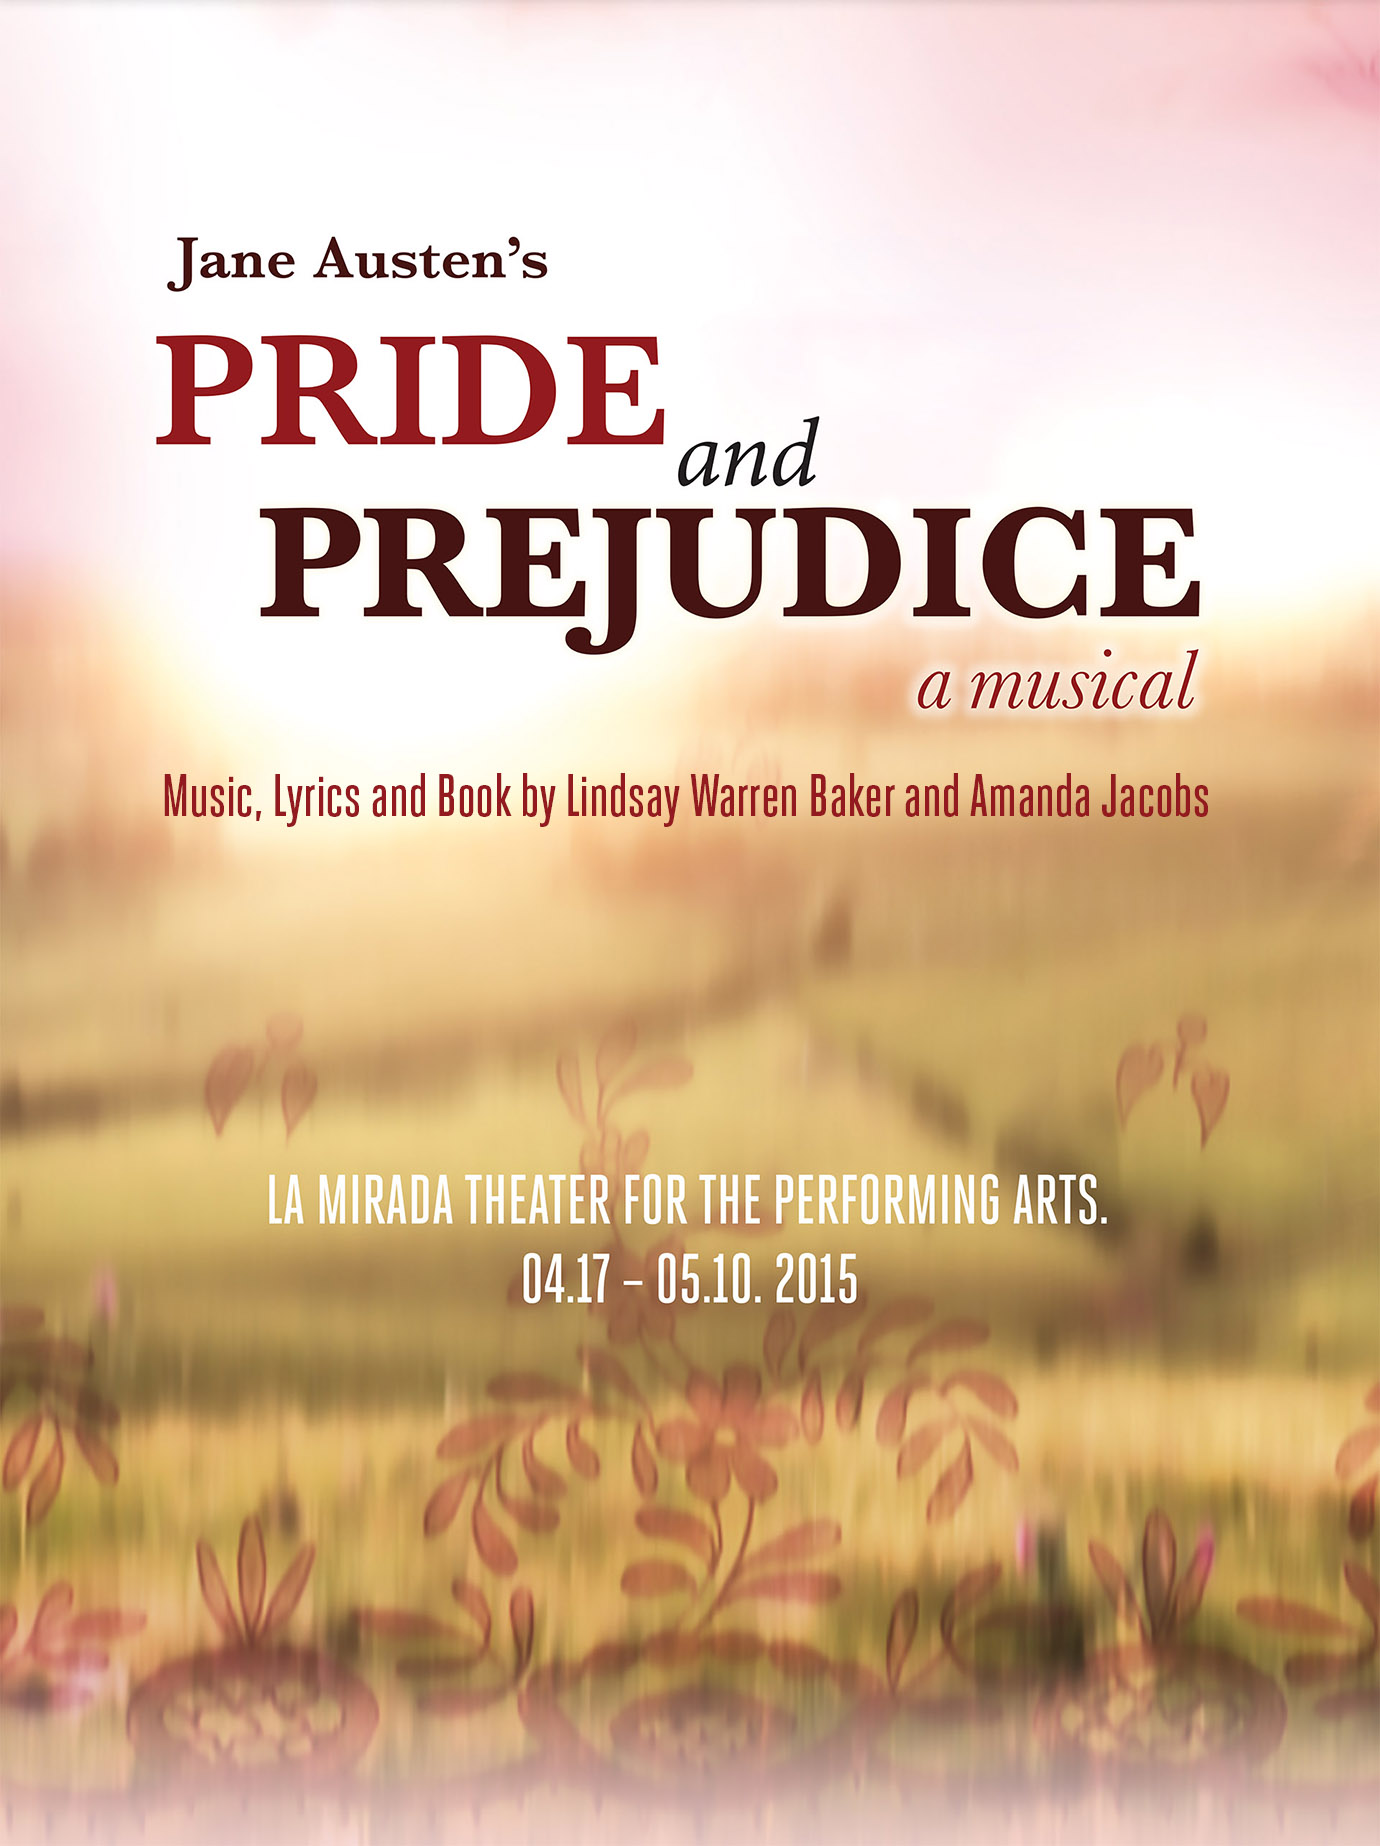 Jane Austen’s Pride and Prejudice at La Mirada Theatre for the Performing Arts